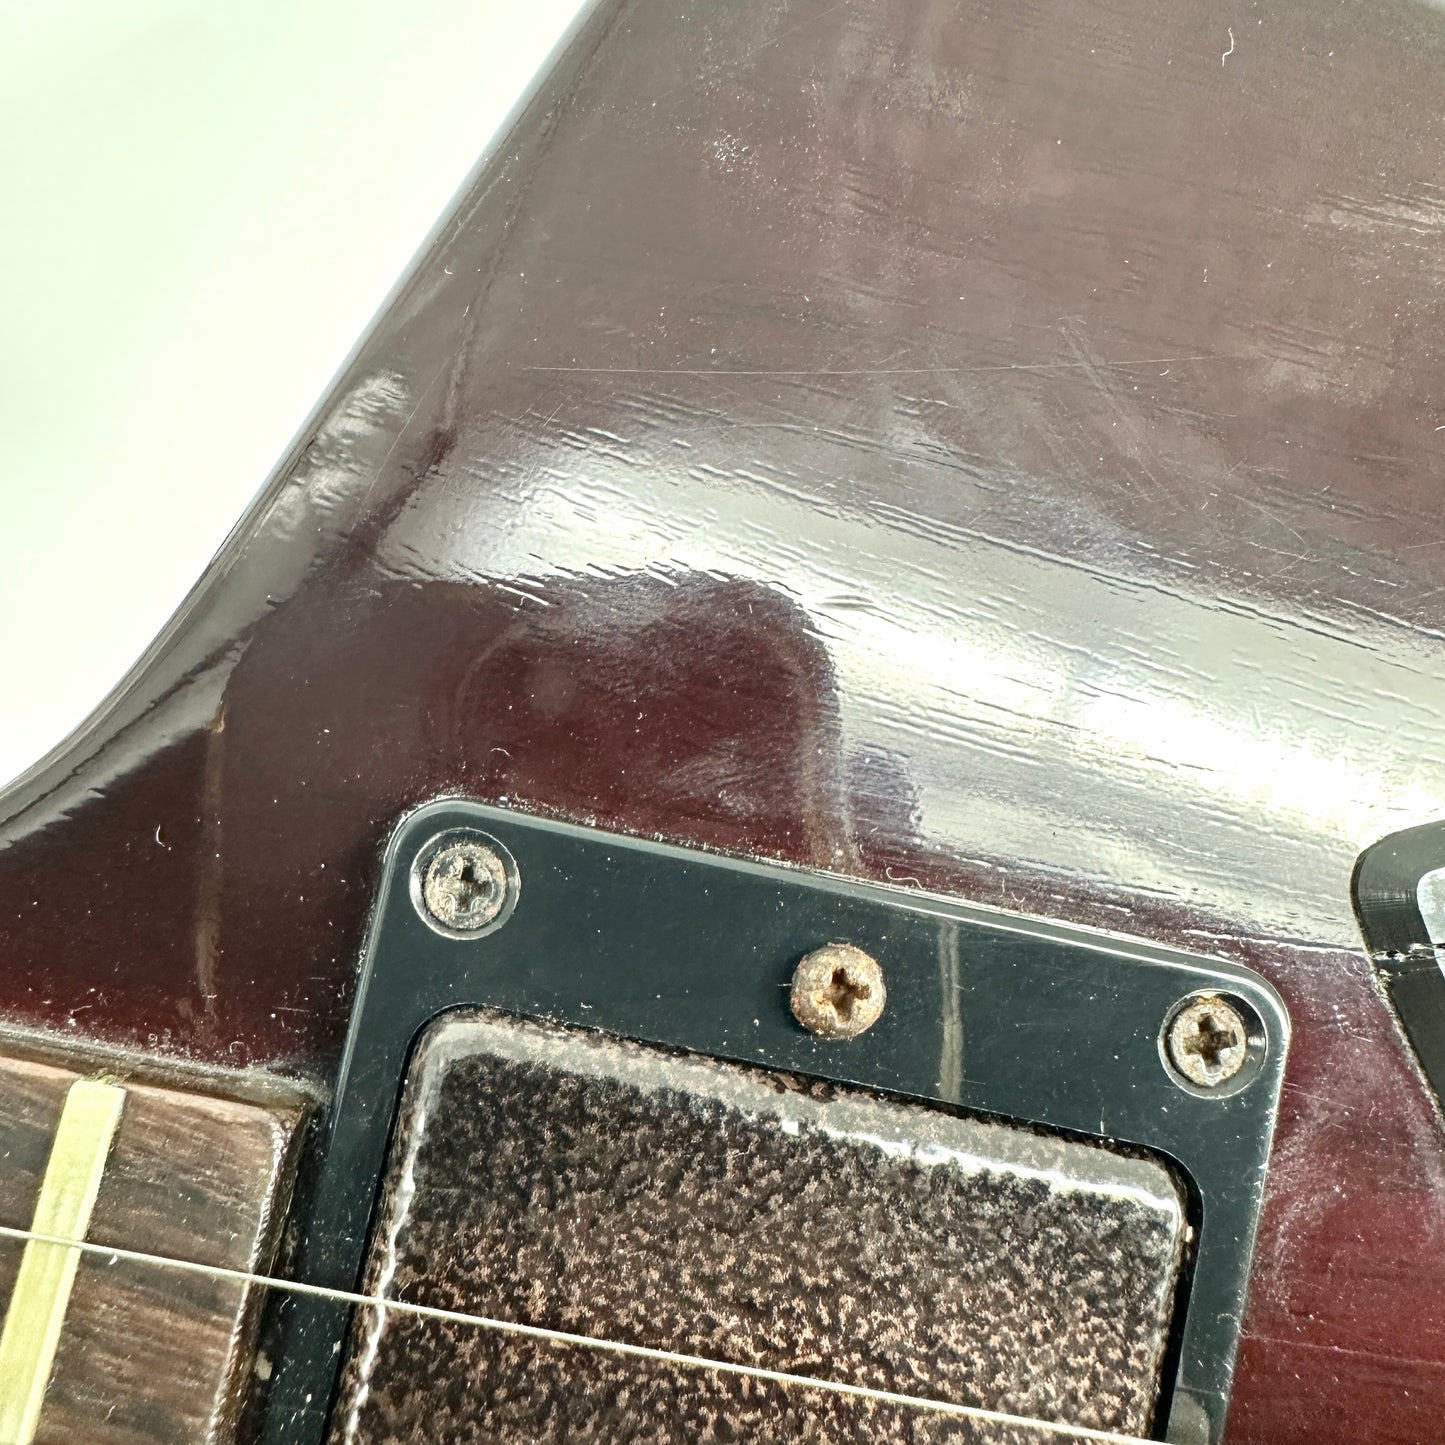 2008 Gibson Explorer Reverse - Guitar of the Month - Antique Walnut